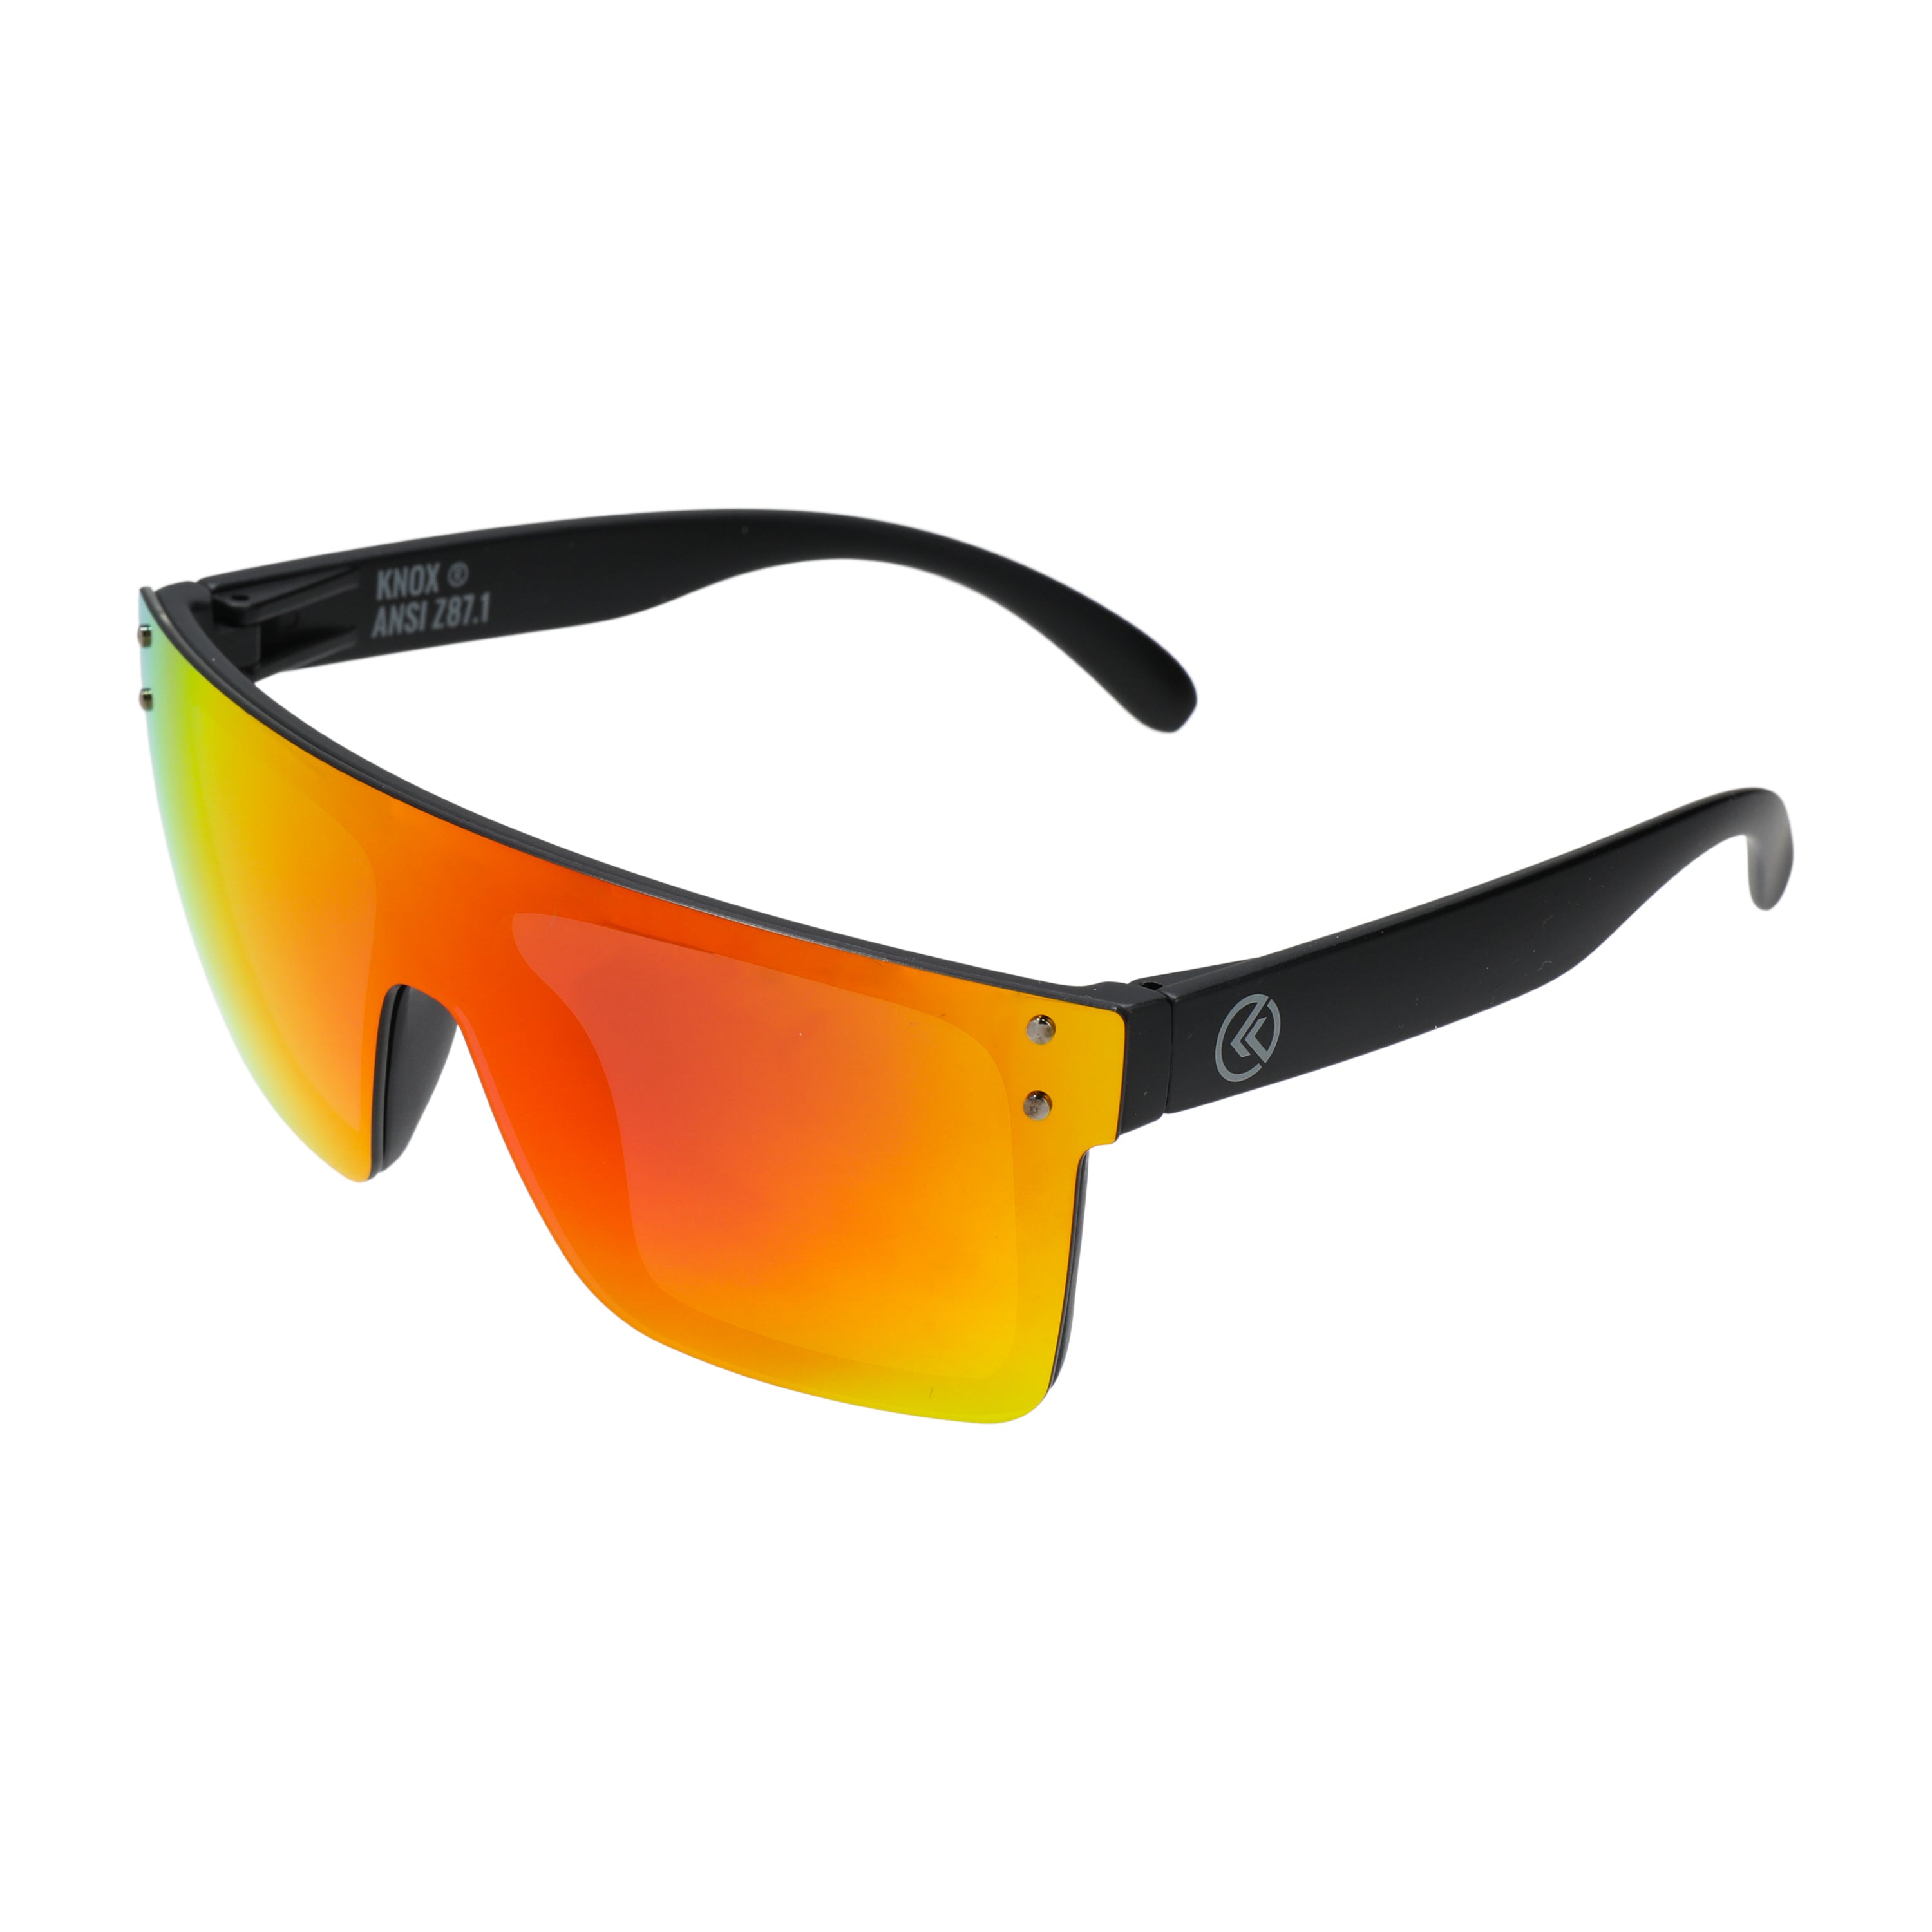 The Inferno Z87 Safety Sunglasses